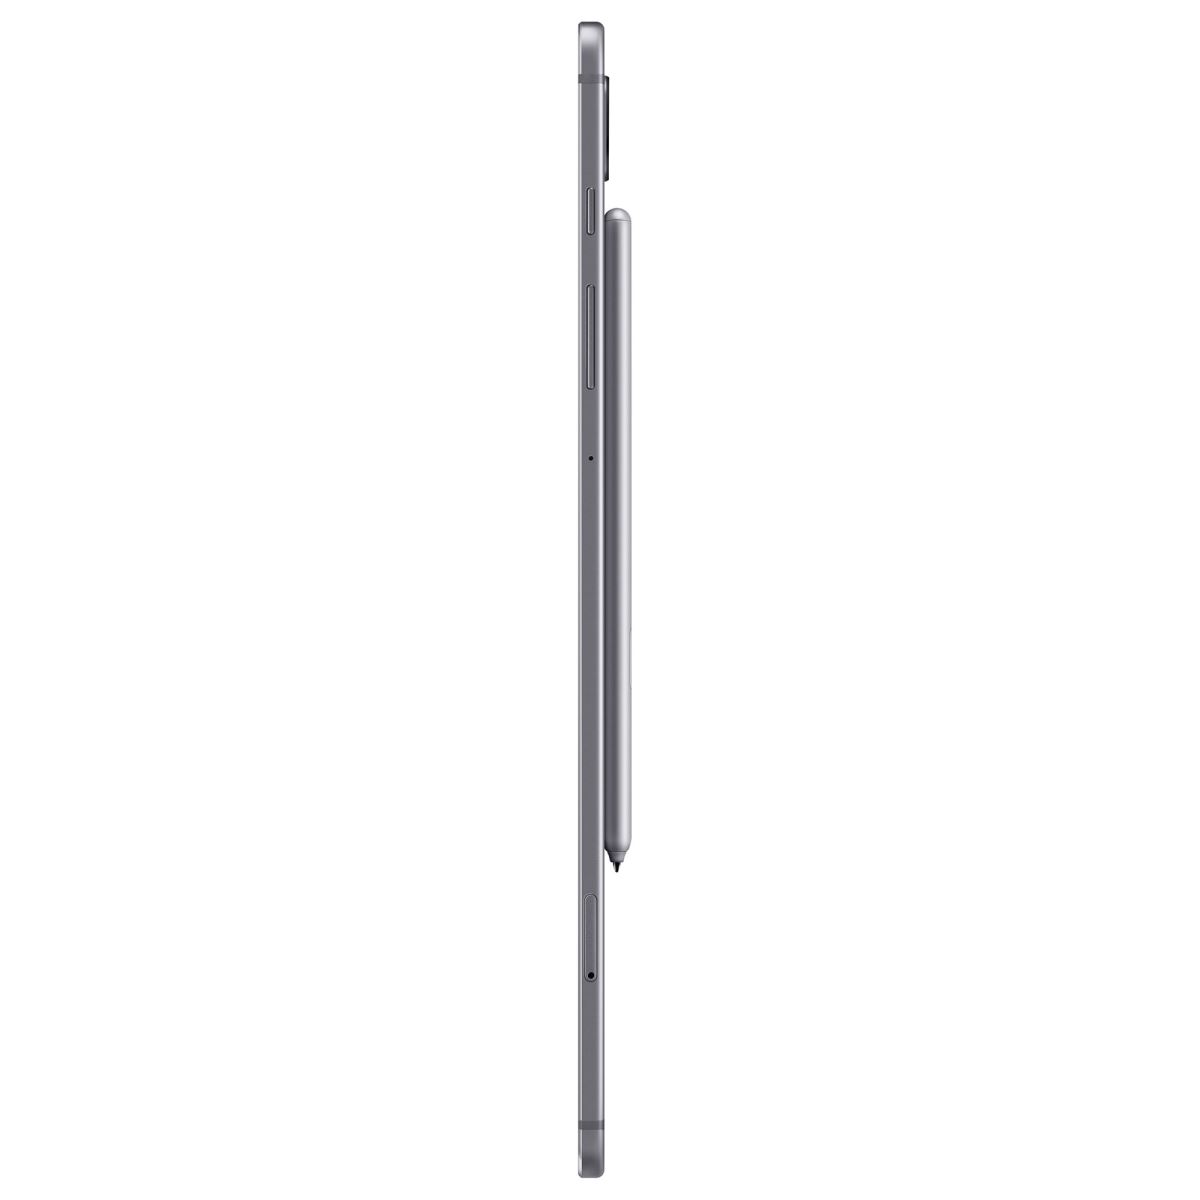 Tableta Samsung Galaxy Tab S6 LTE, 10.5'', RAM 6GB, Stocare 128GB, Gray